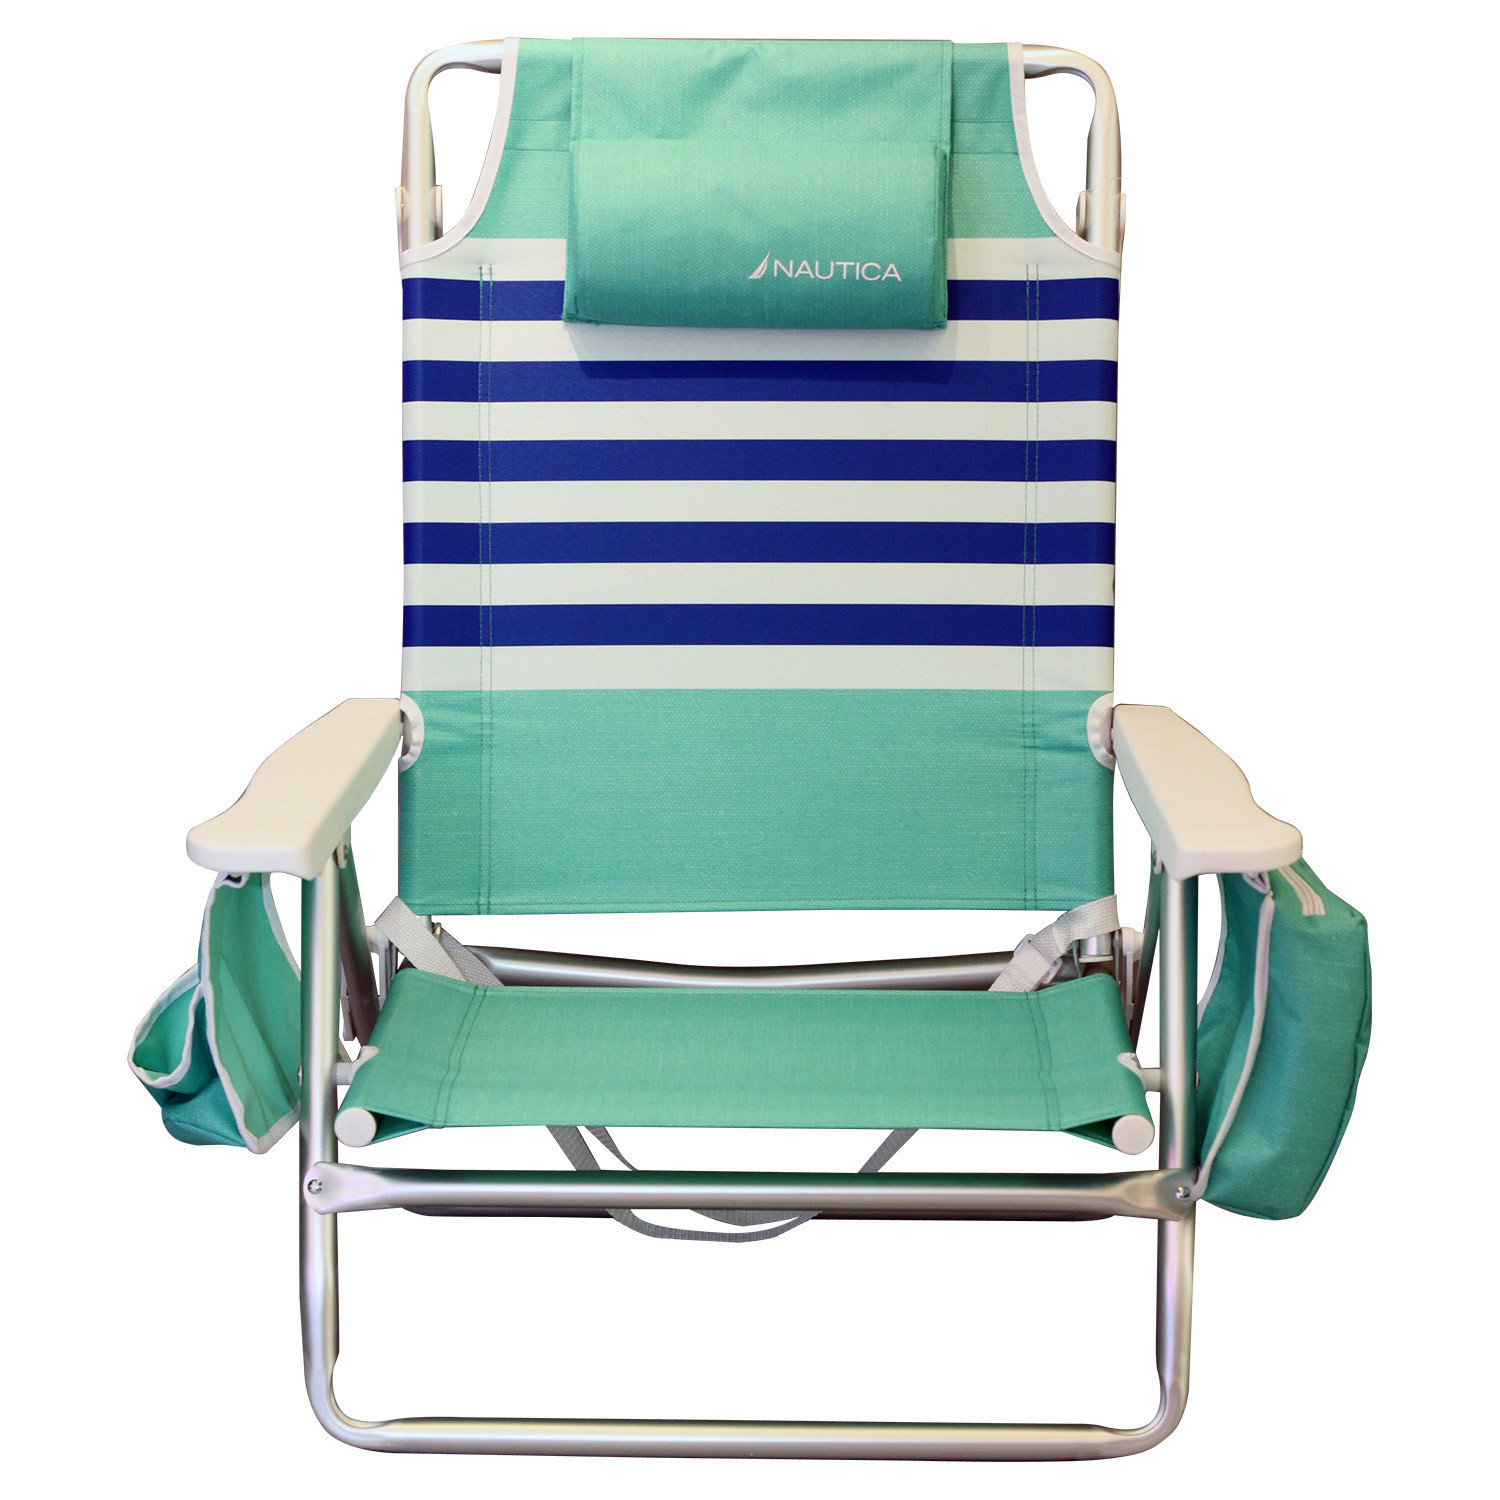 Best ideas about Nautica Beach Chair
. Save or Pin Nautica Stripe Beach Chair with Cushions Now.